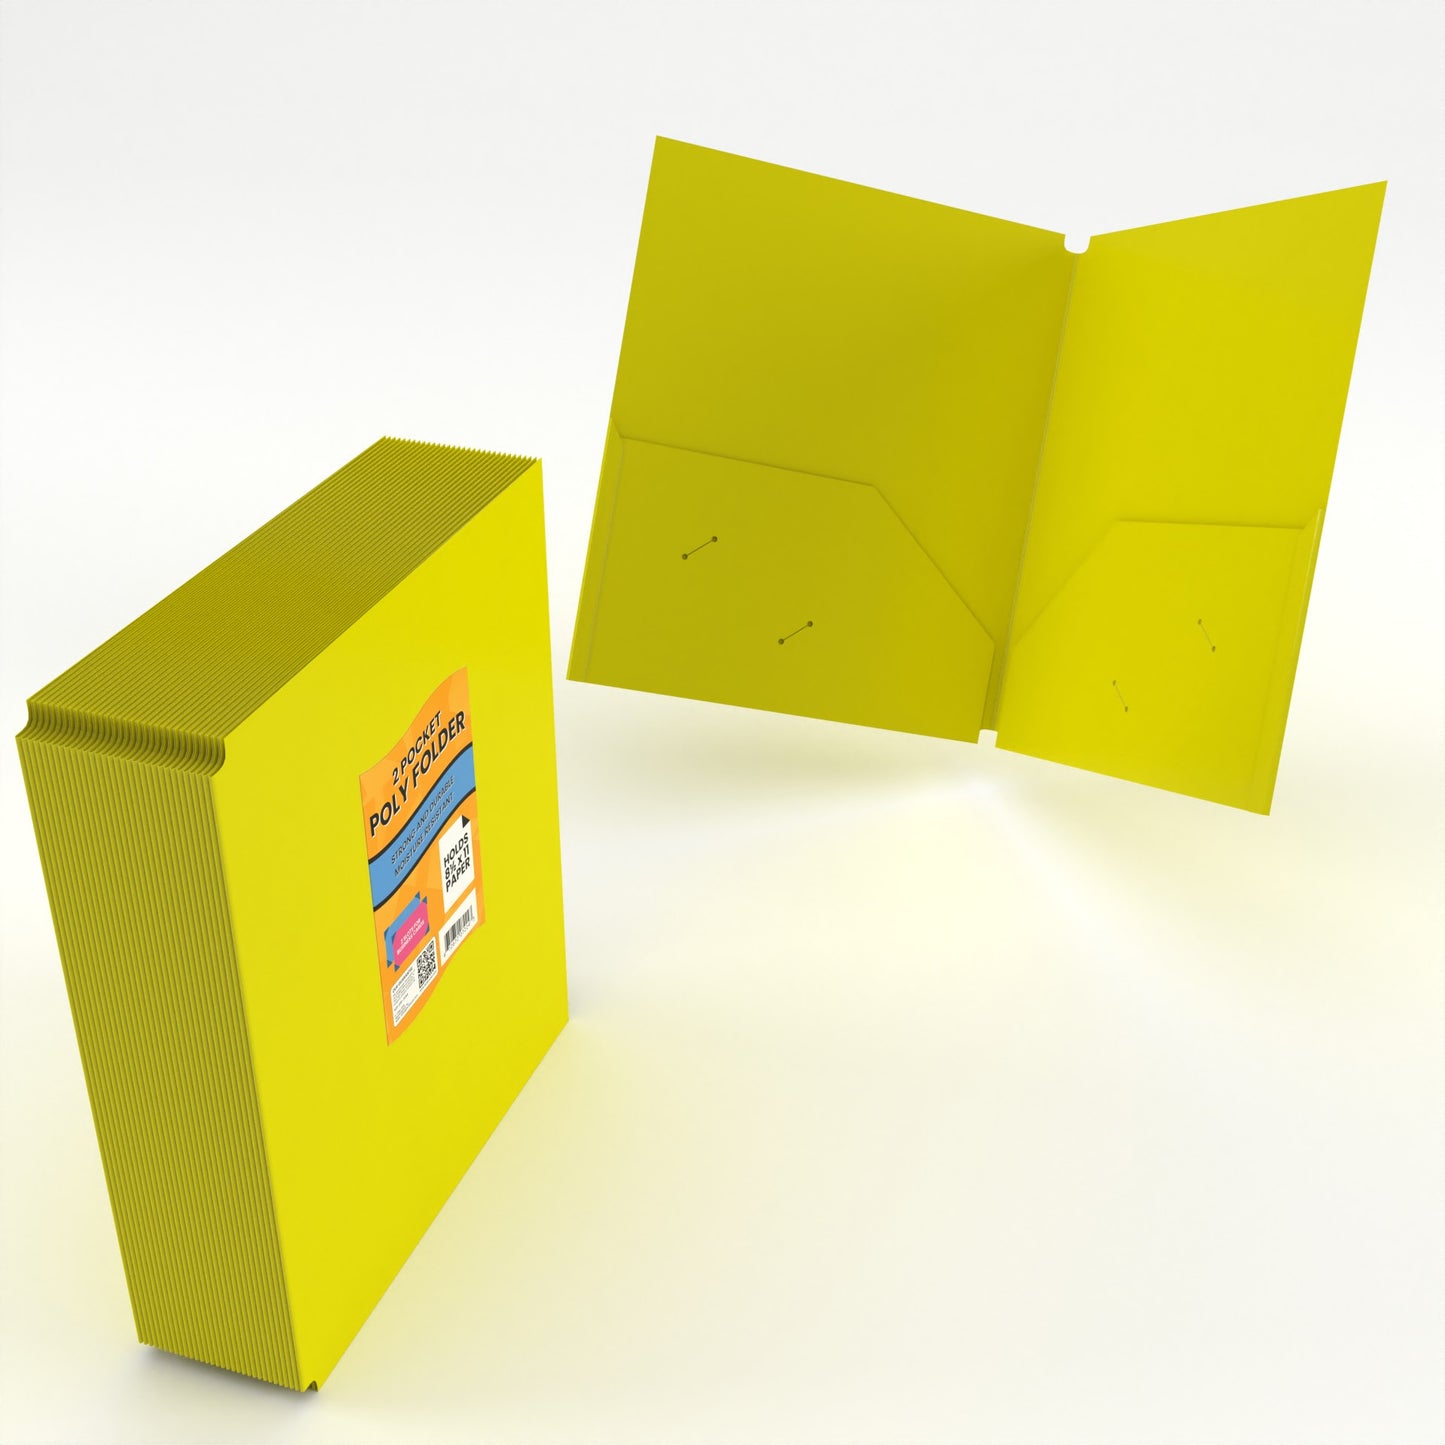 Poly Folders:  (Yellow) Matt (Inside) - Shiny (Outside), No Holes, 2 Pockets | Case Pack: 48